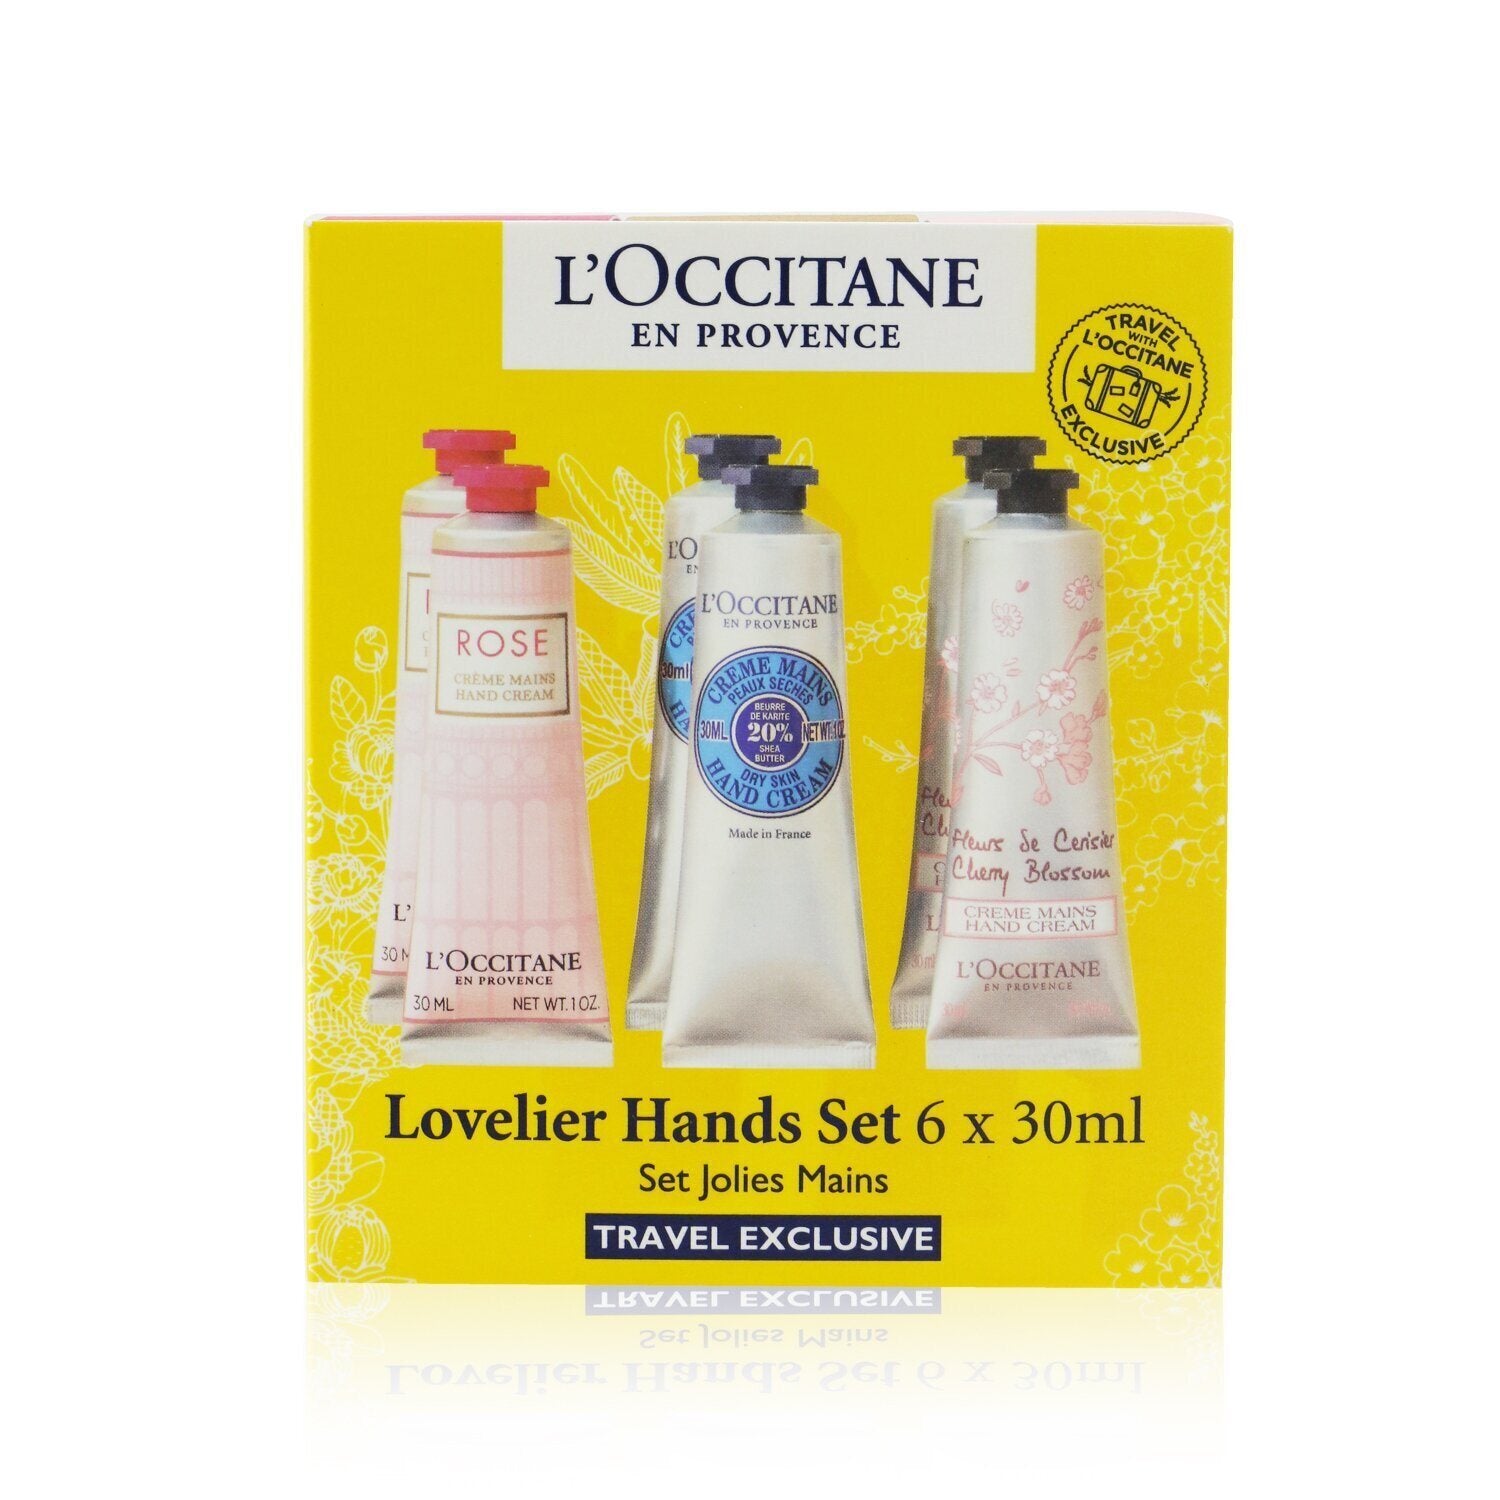 L'OCCITANE - Lovelier Hands Set: 2xRose Hand Cream 30ml+2x Shea Butter Hand Cream 30ml+2x Cherry Blossom Hand Cream 30ml 594988 6x30ml/1oz - lolaluxeshop